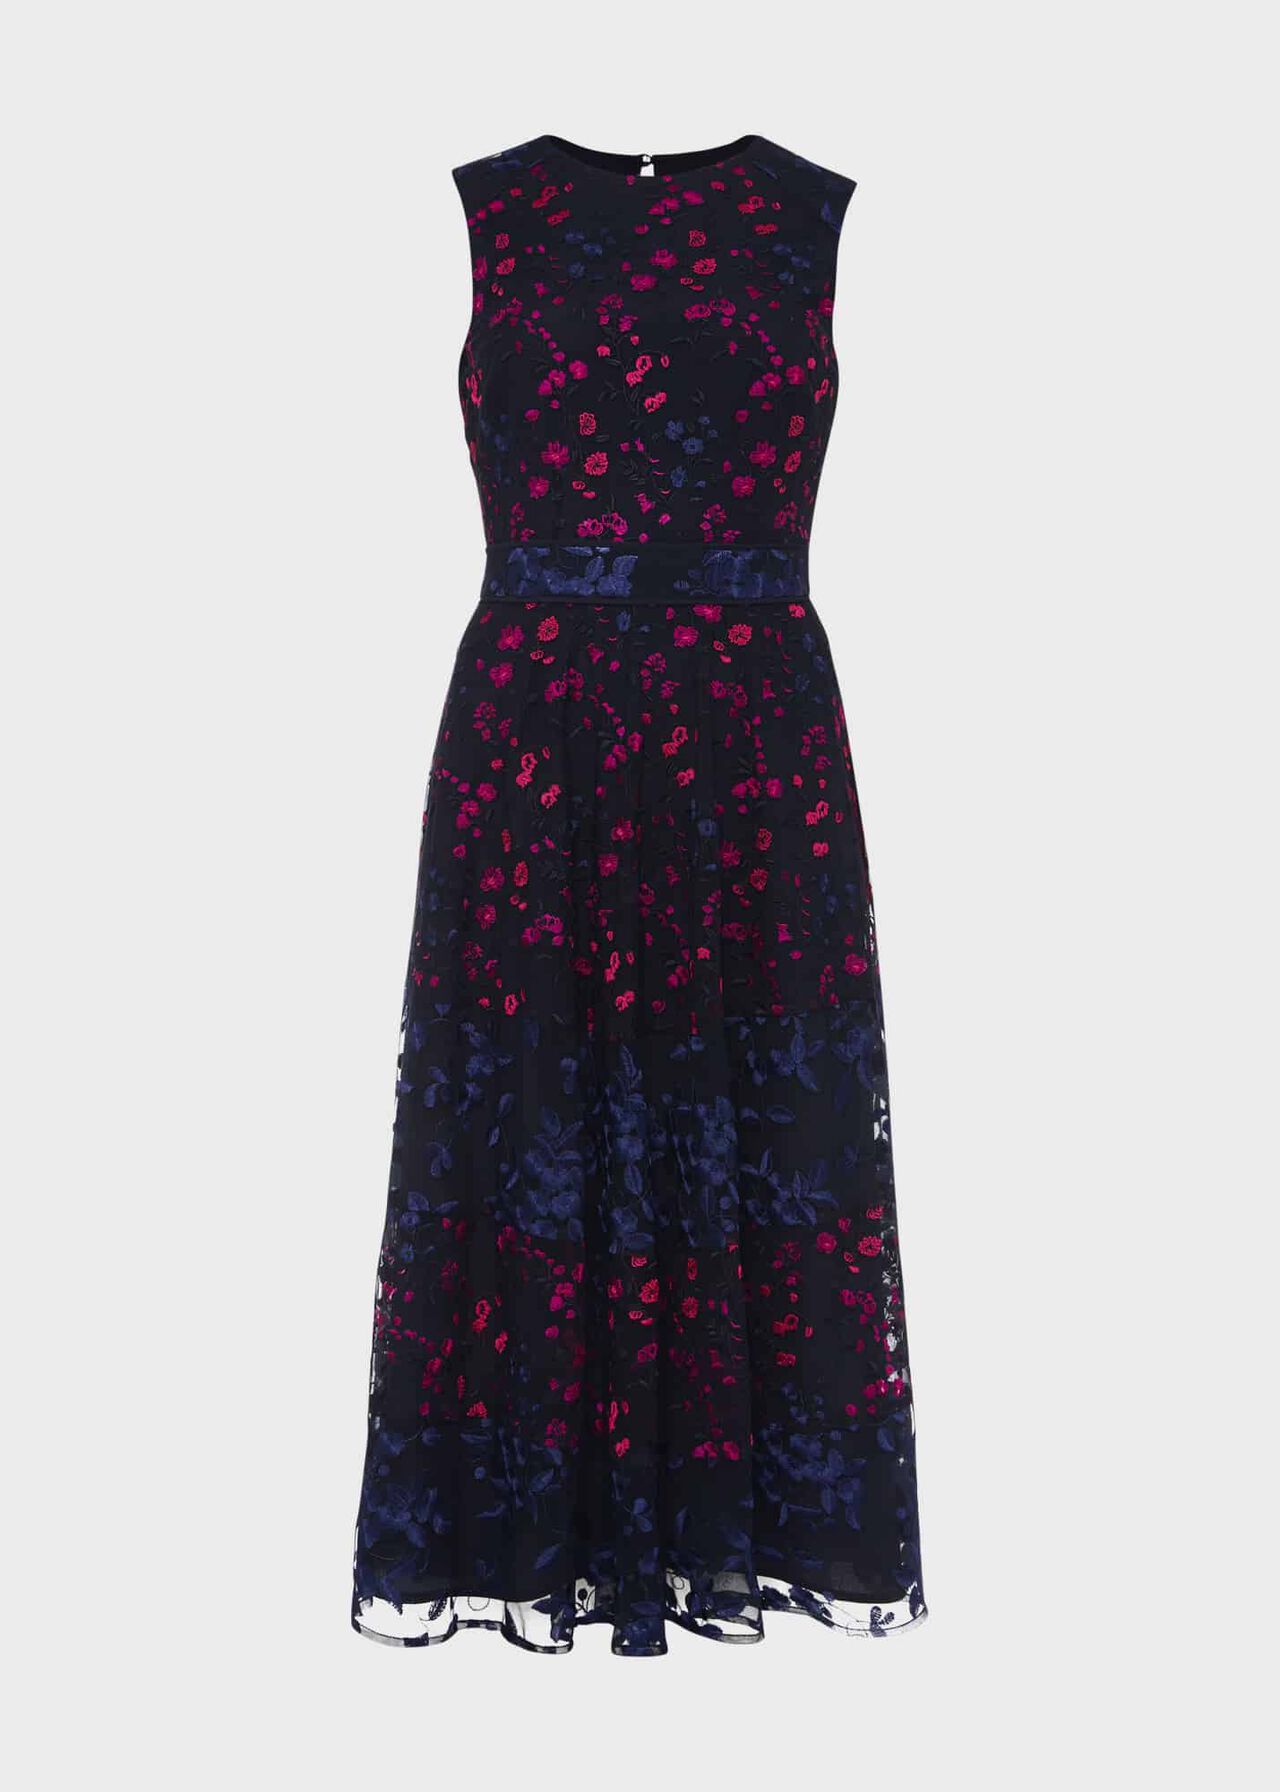 Kasia Floral Embroidered Dress, Navy Multi, hi-res